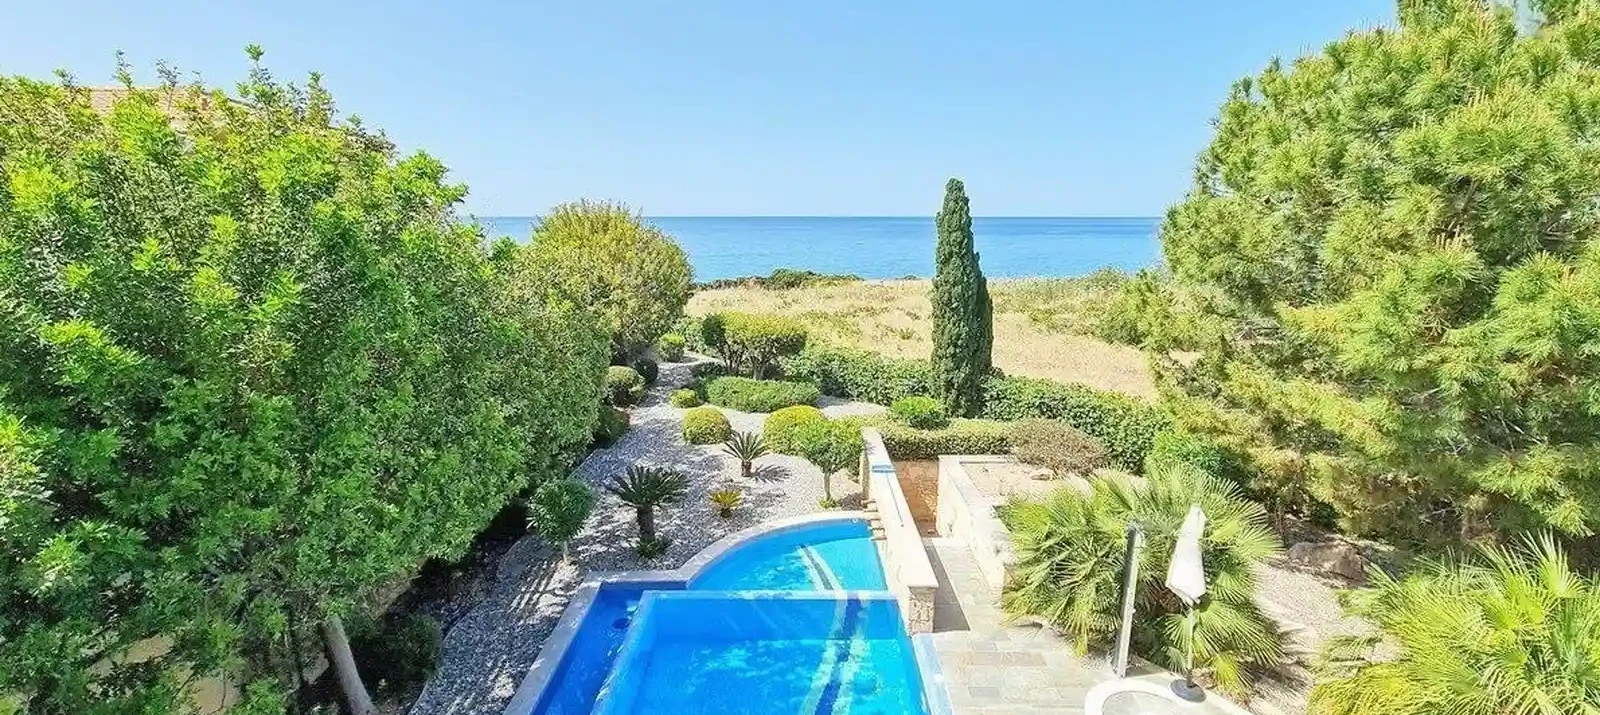 5-bedroom villa fоr sаle €1.750.000, image 1